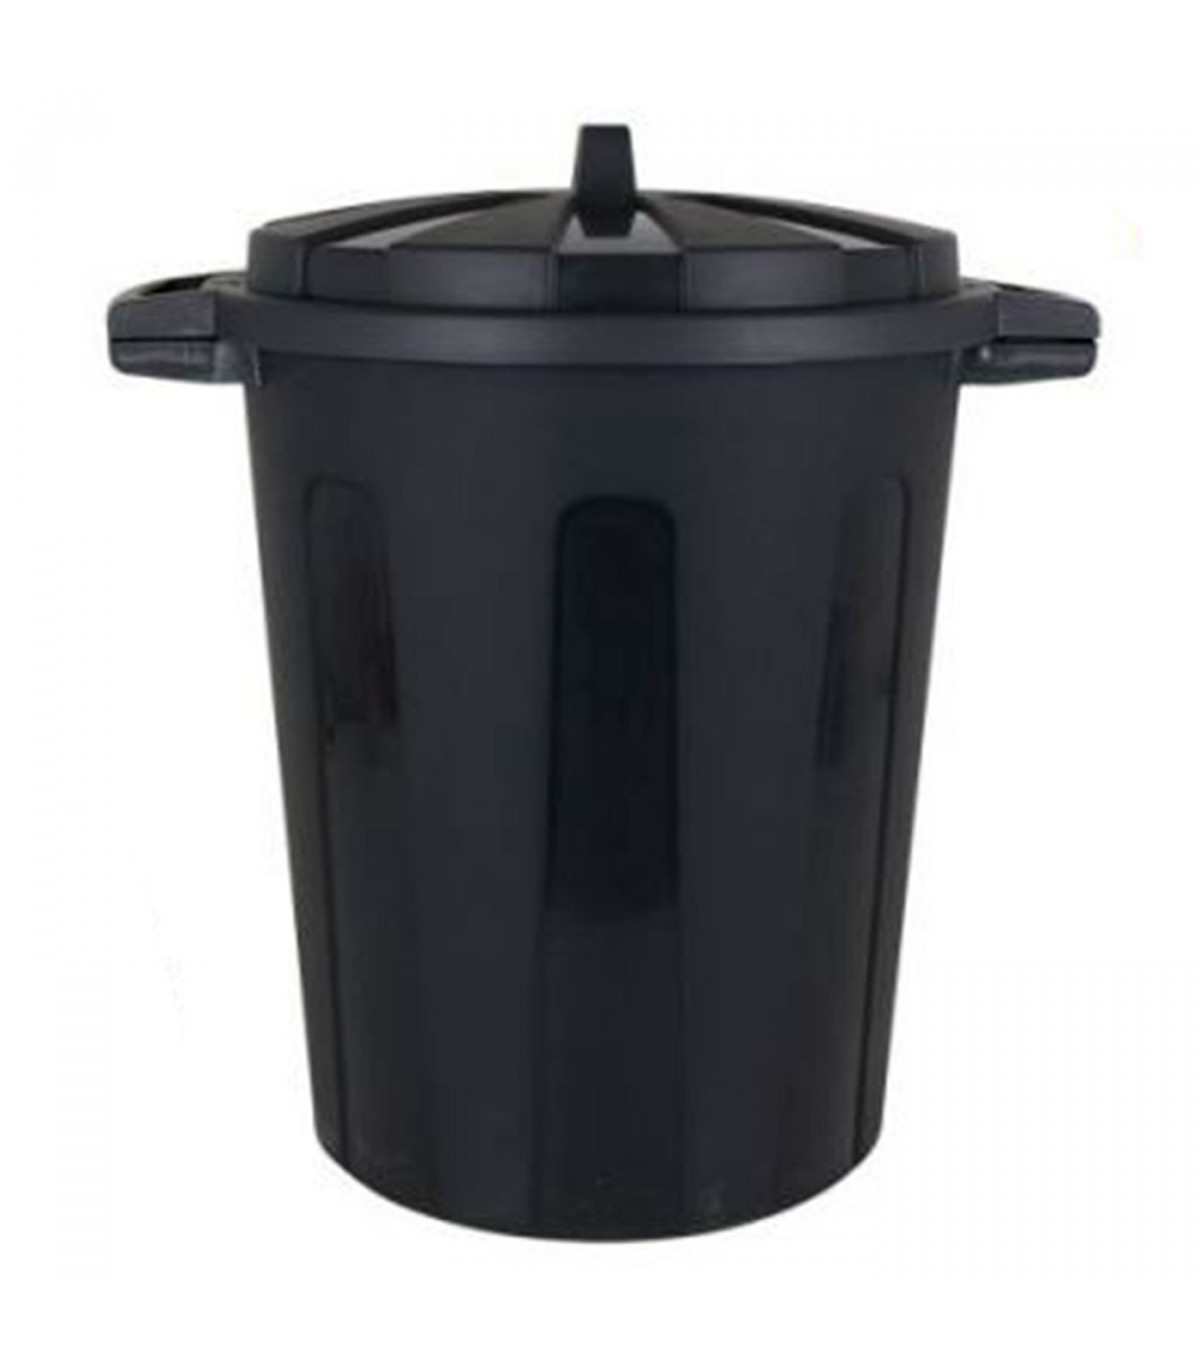 Cubo de basura bin de 100 litros, color negro, 68,2 x 63,8 x 53,4